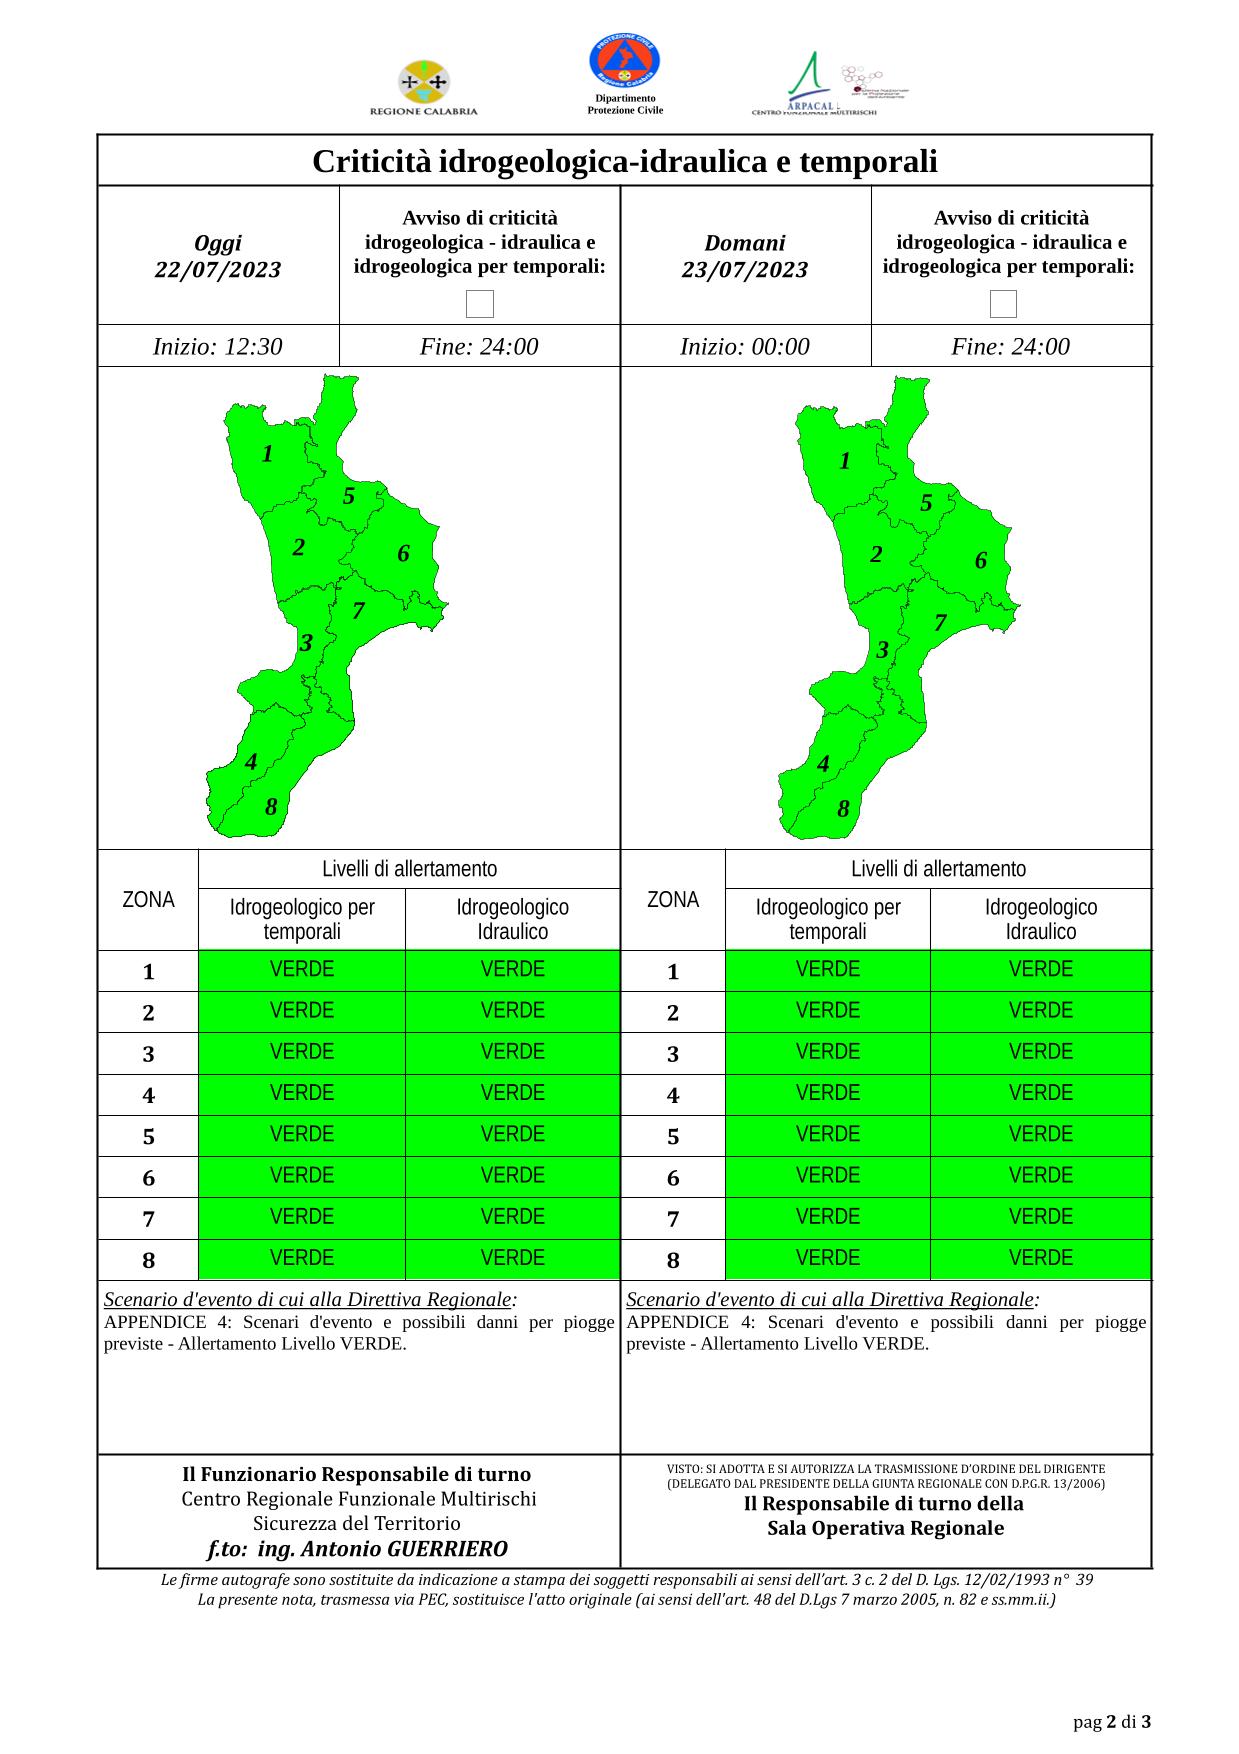 Criticità idrogeologica-idraulica e temporali in Calabria 22-07-2023